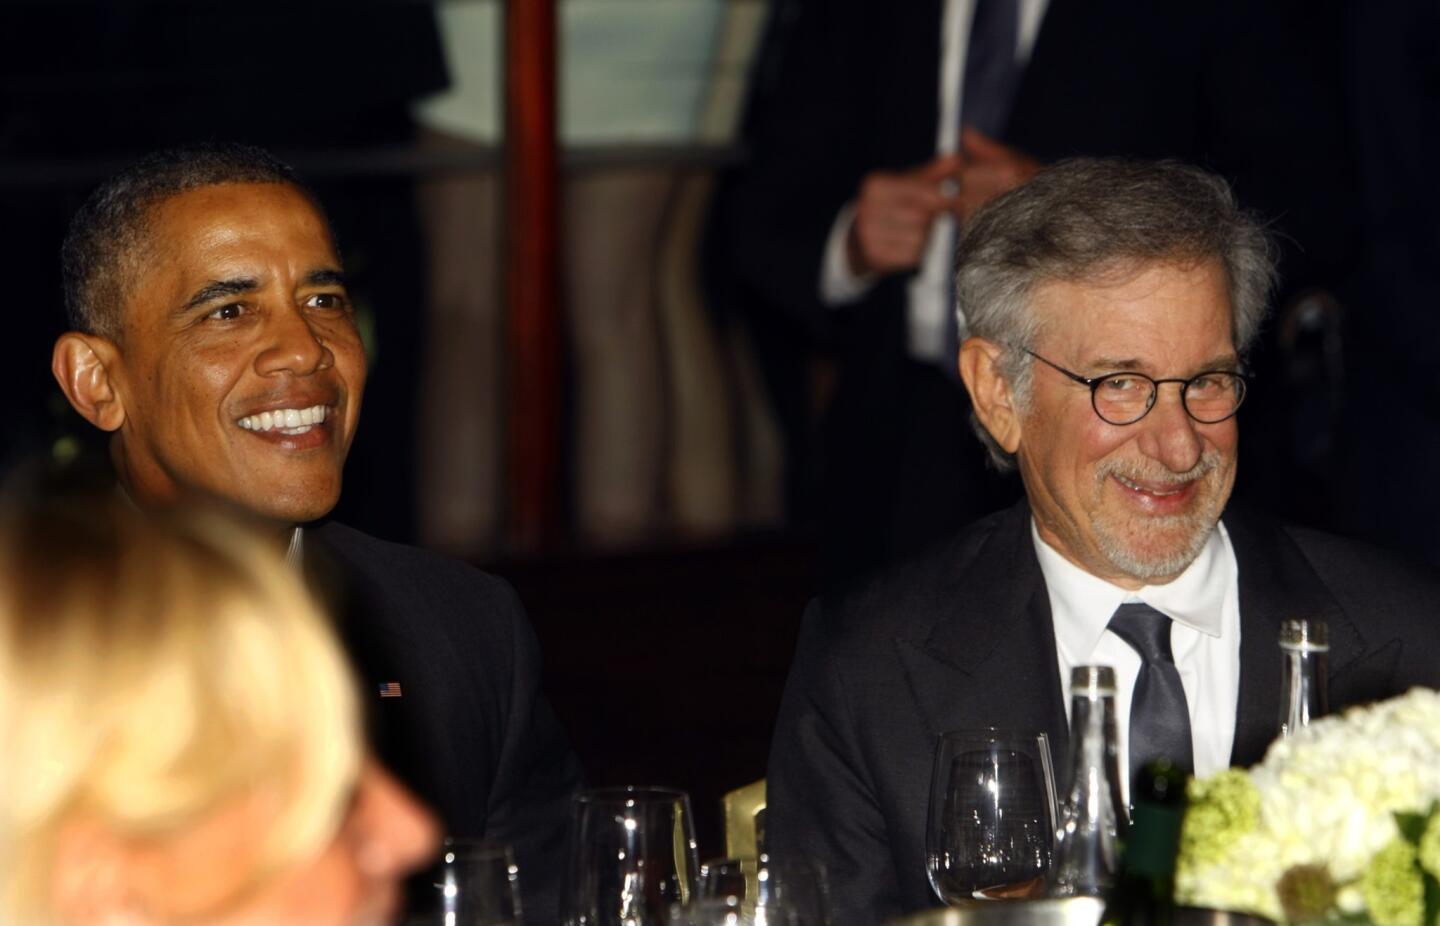 President Obama with Steven Spielberg